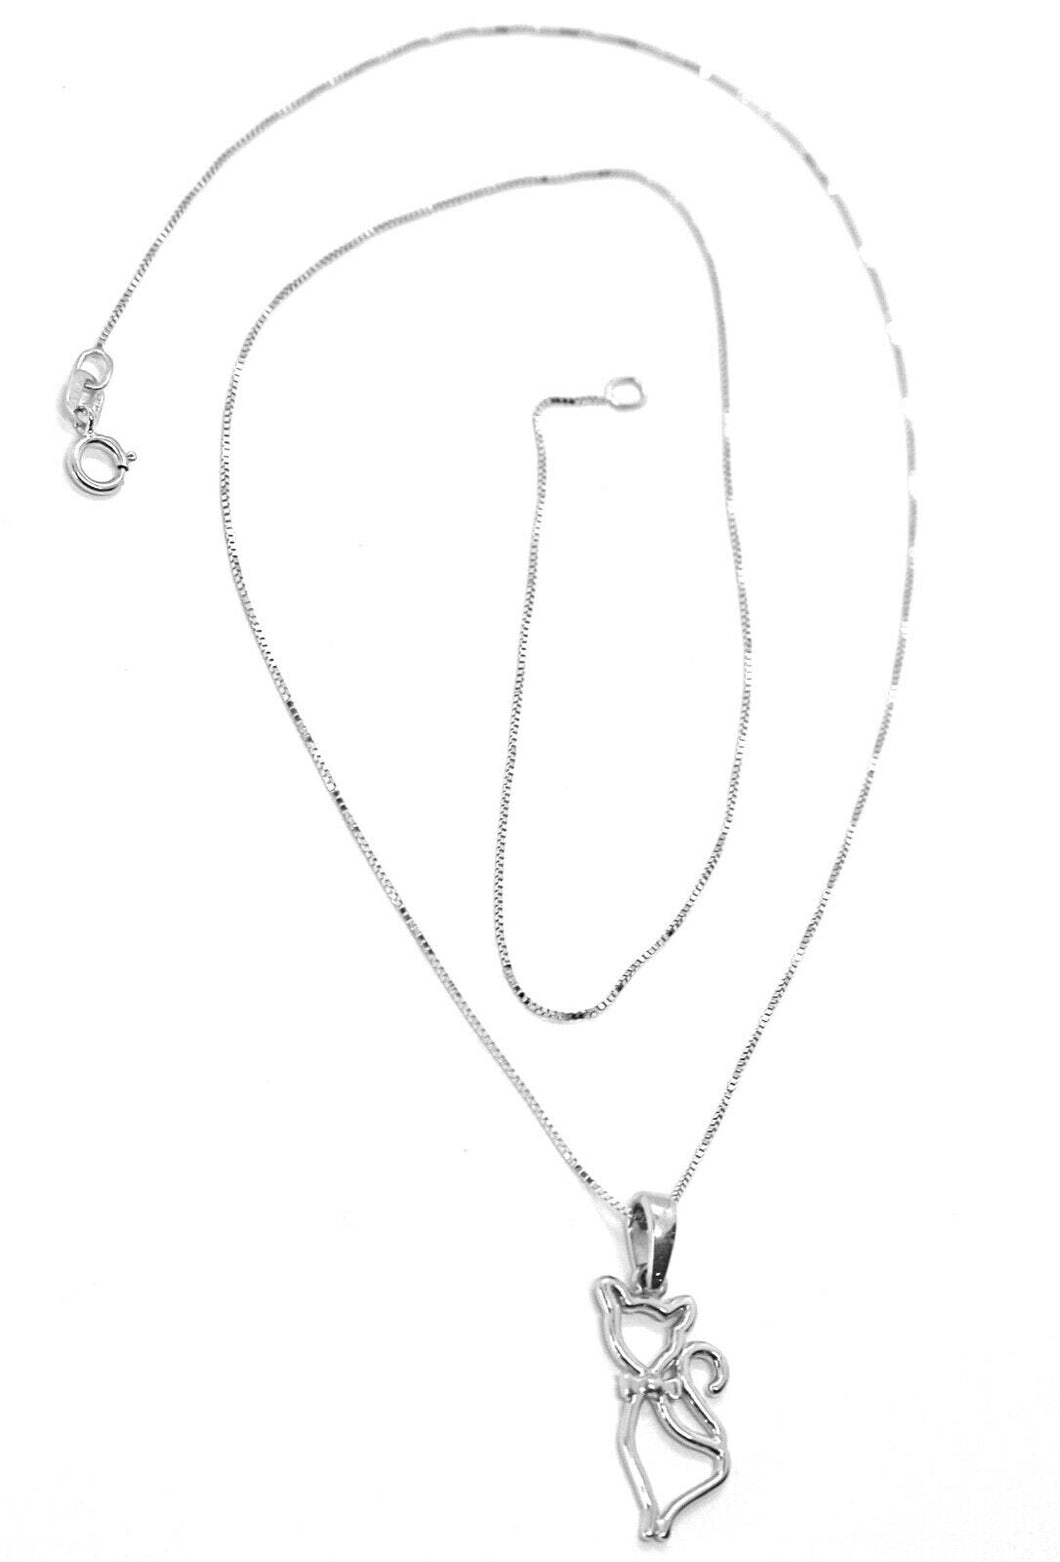 18k white gold mini necklace, cat pendant 0.7